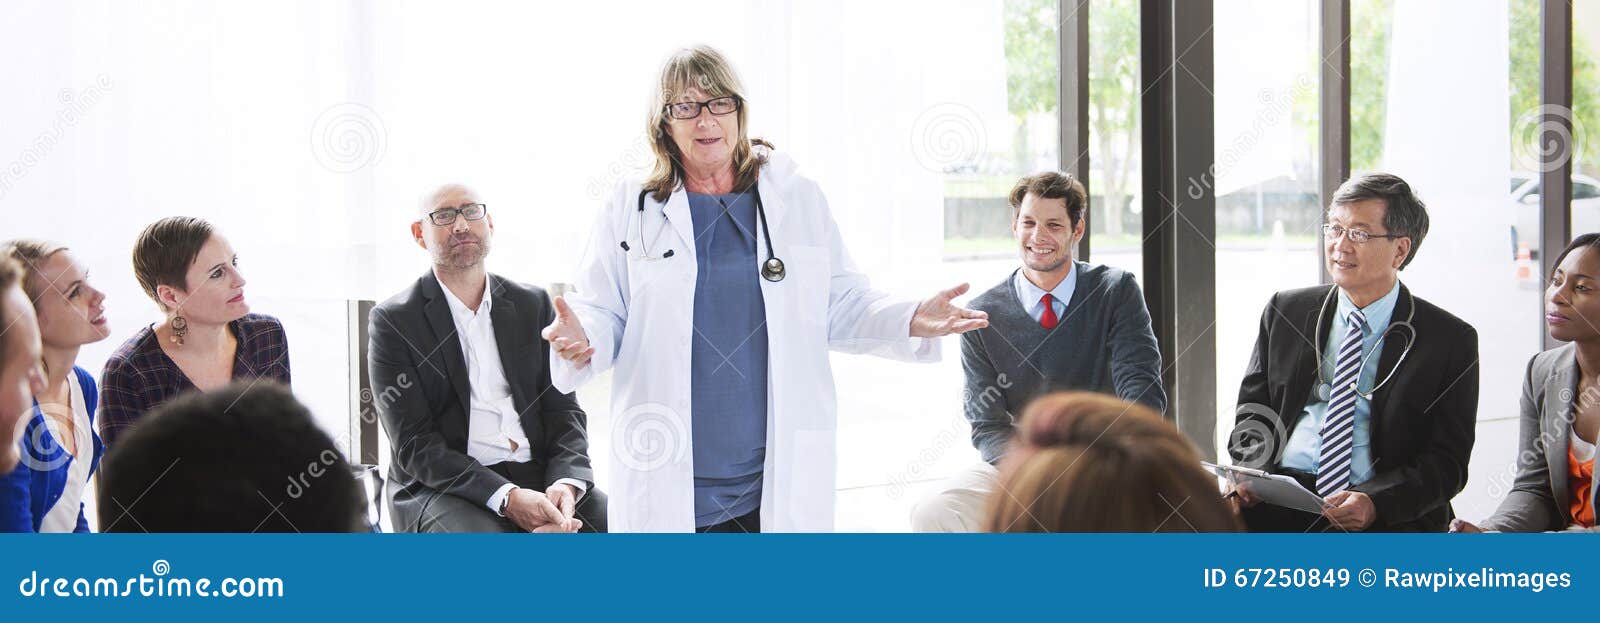 doctor meeting teamwork diagnosis healthcare concept